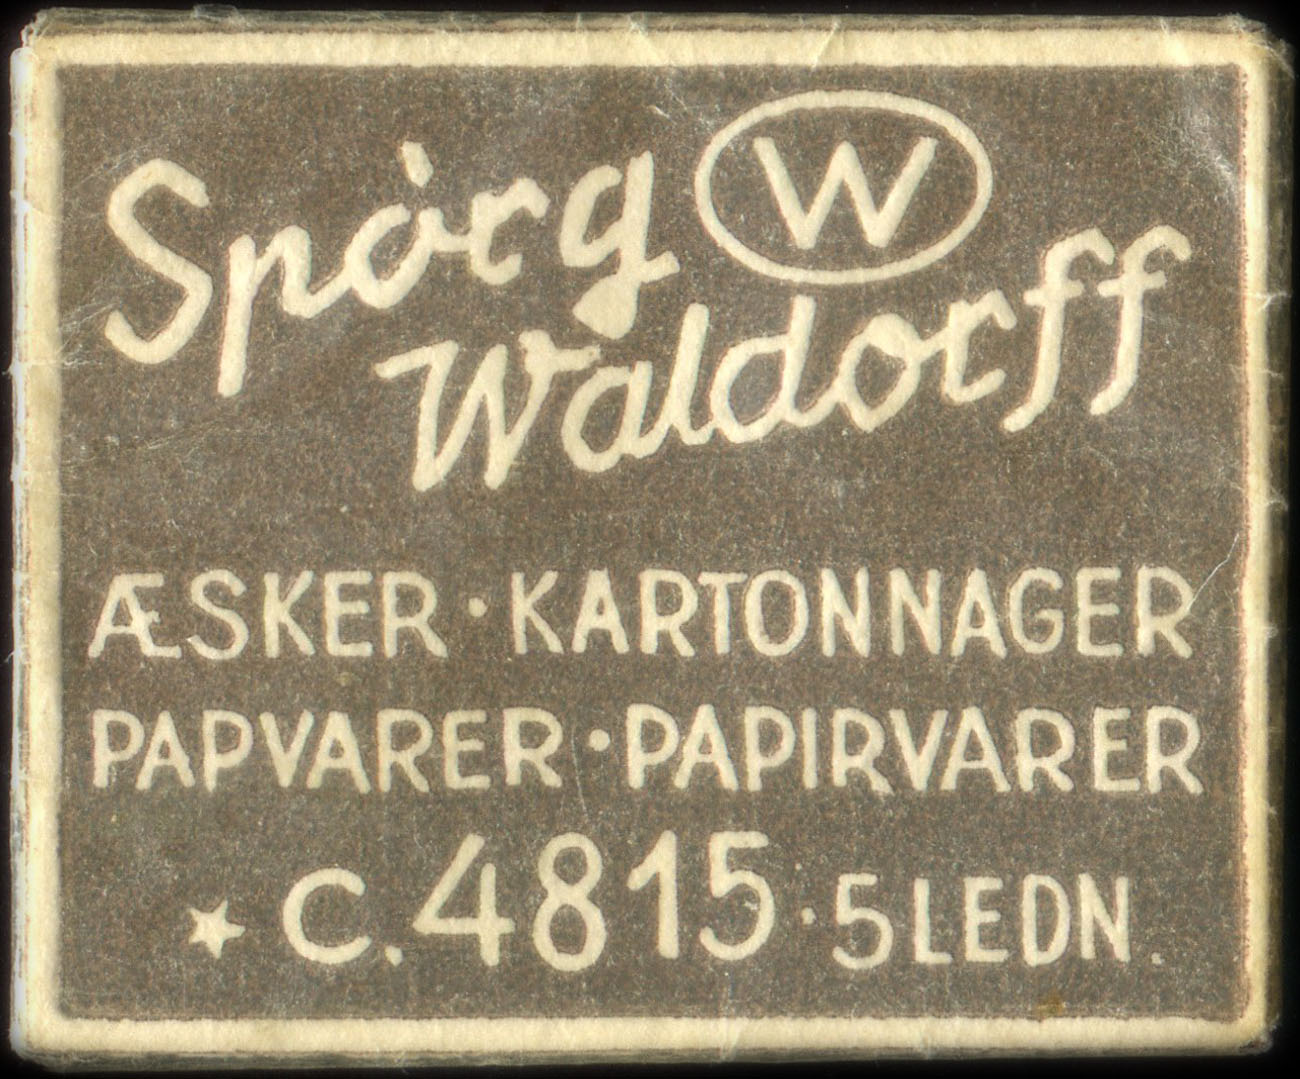 Timbre-monnaie Spòrg Waldorff - Æsker - Kartonnager - Papvarer - Papirvarer - C.4815. 5 Ledn - fond marron - Danemark